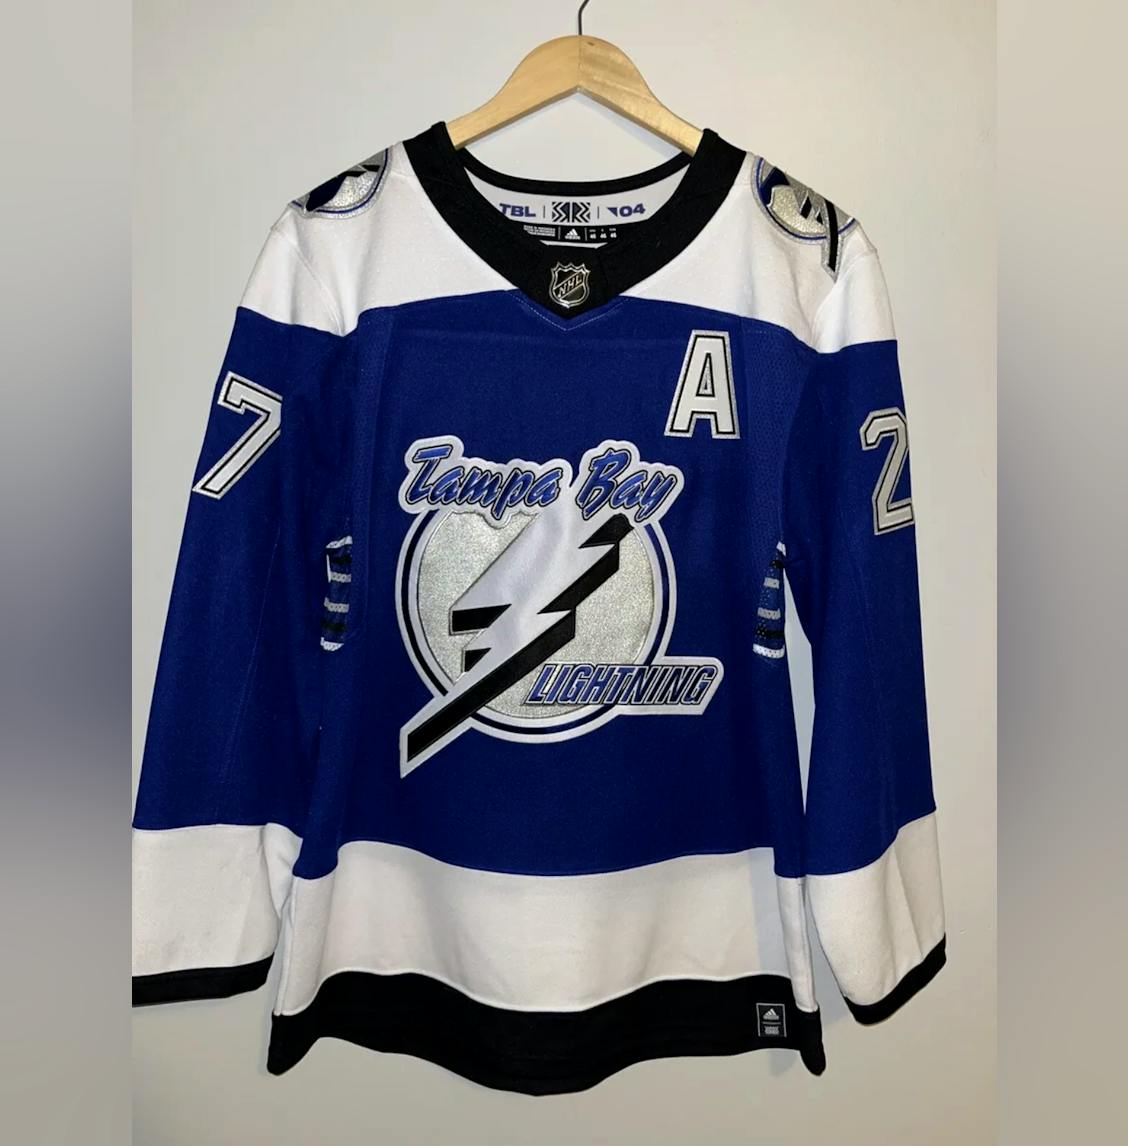 Authentic Tampa Bay Lightning Vintage Hockey Jersey, size 52 (XXL